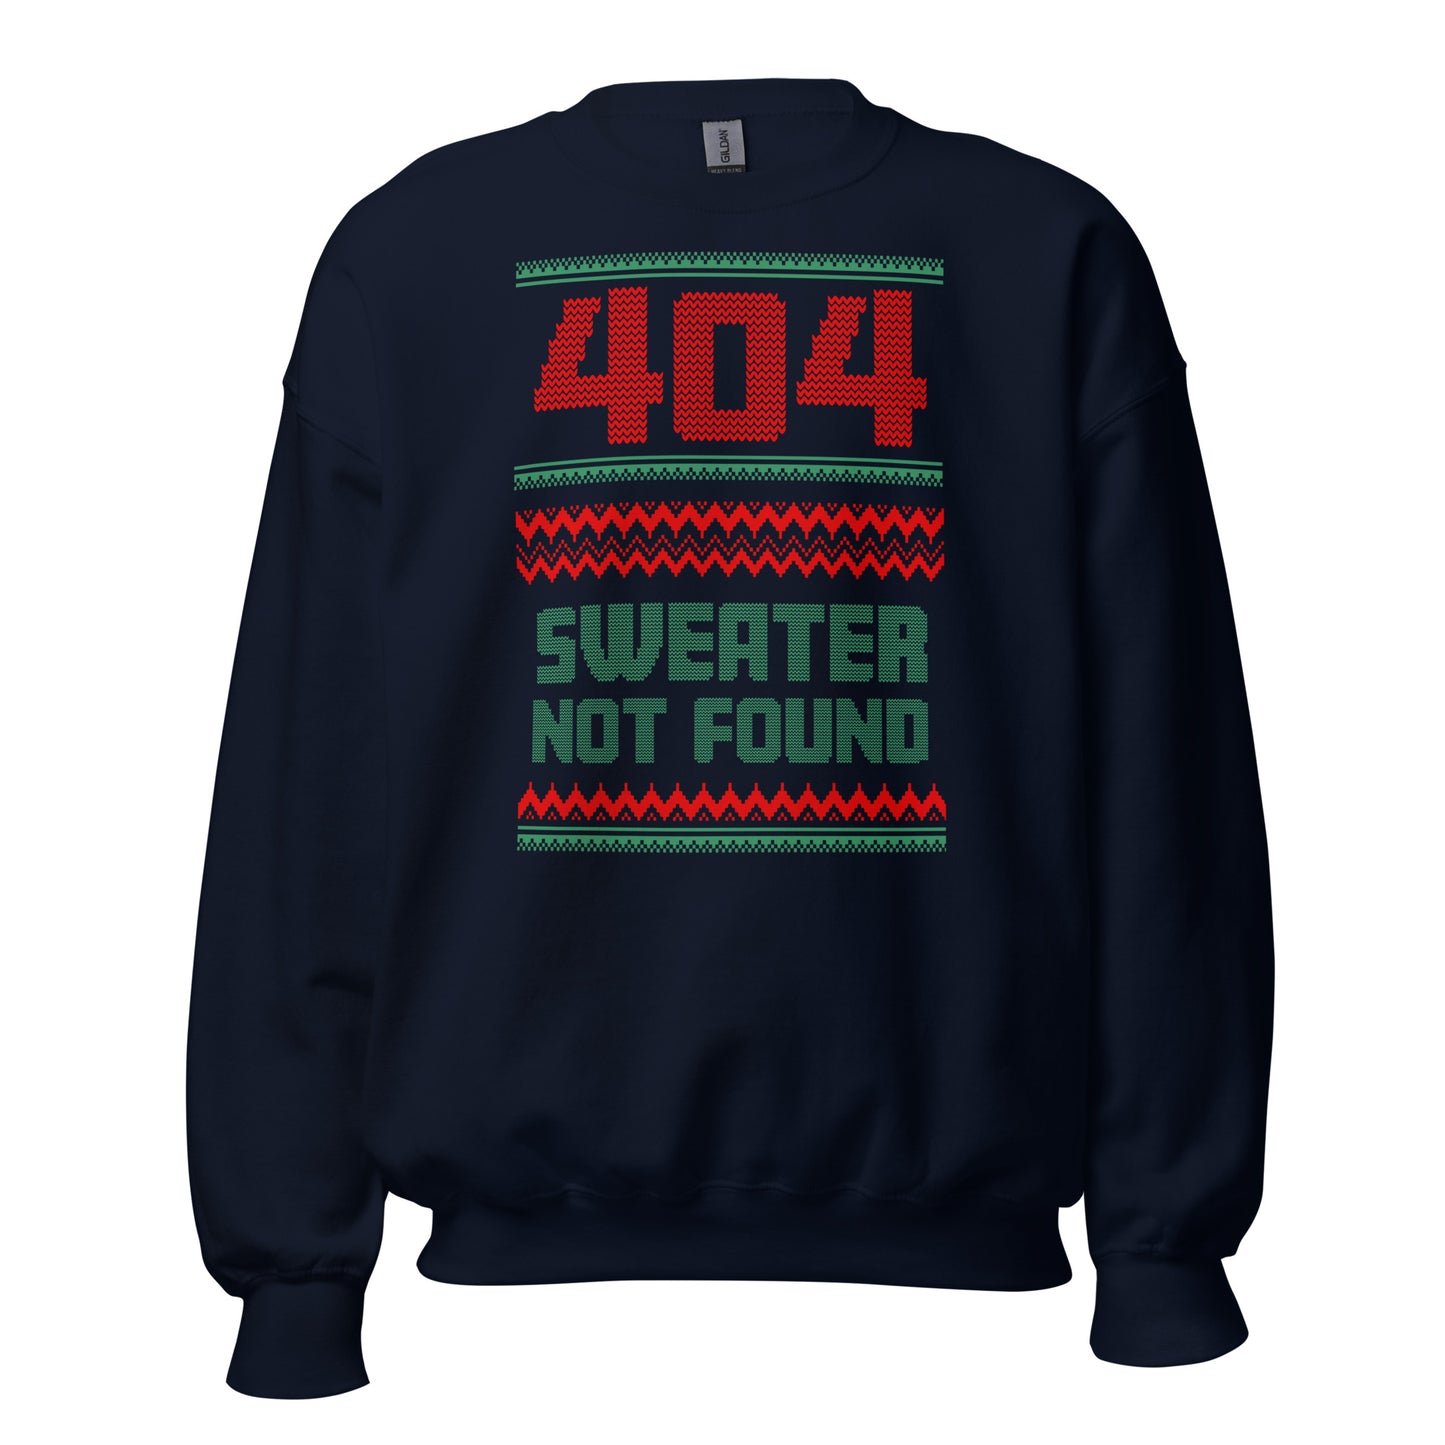 404, Sweater Not Found - Ugly Holiday Sweater - Unisex Sweatshirt